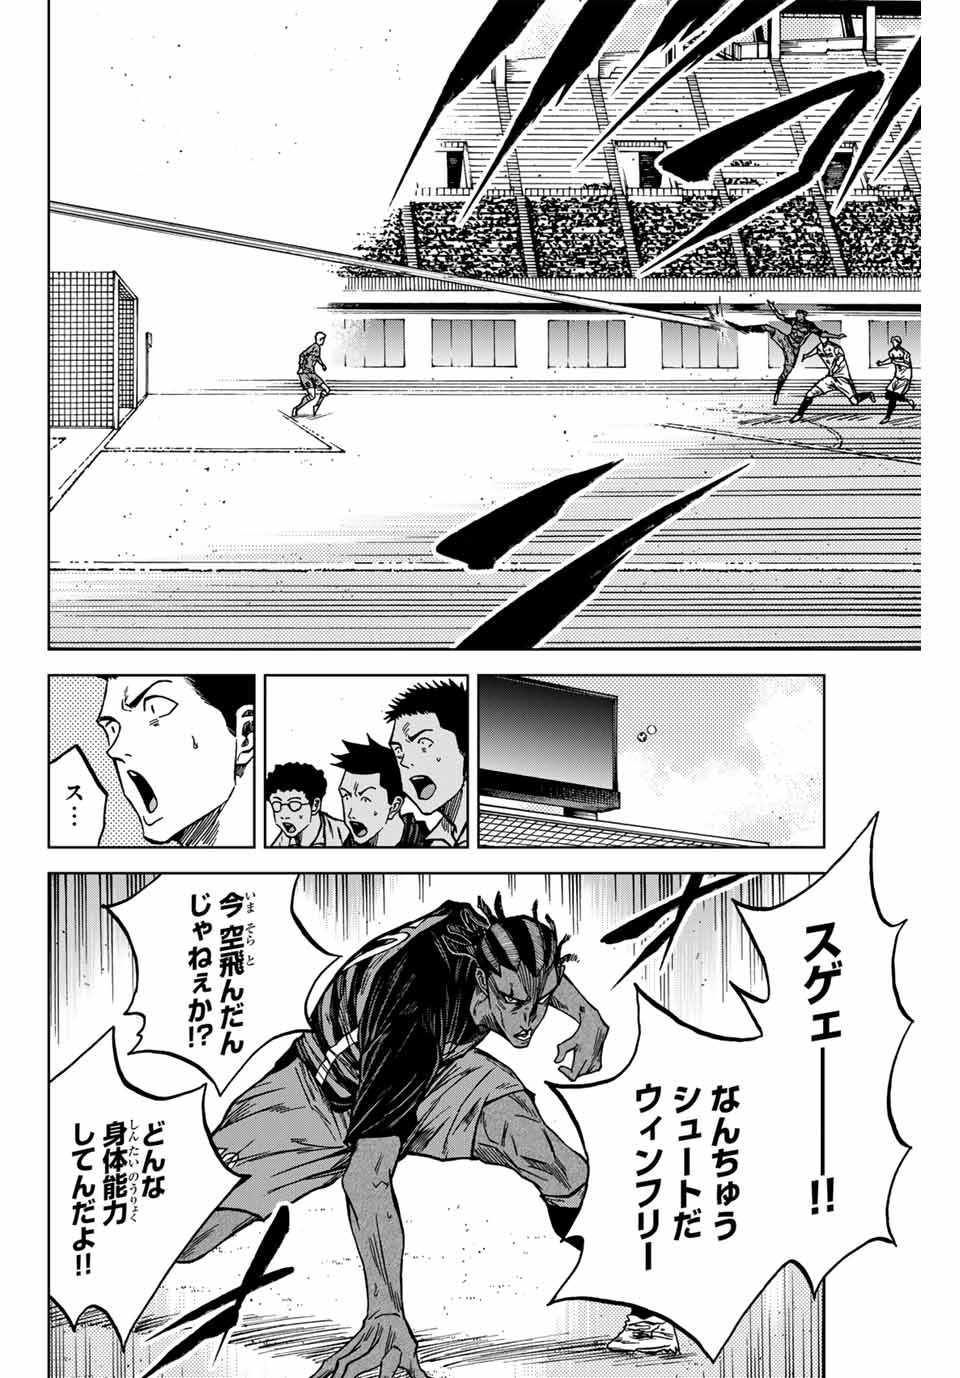 Aoku Somero - Chapter 122 - Page 14